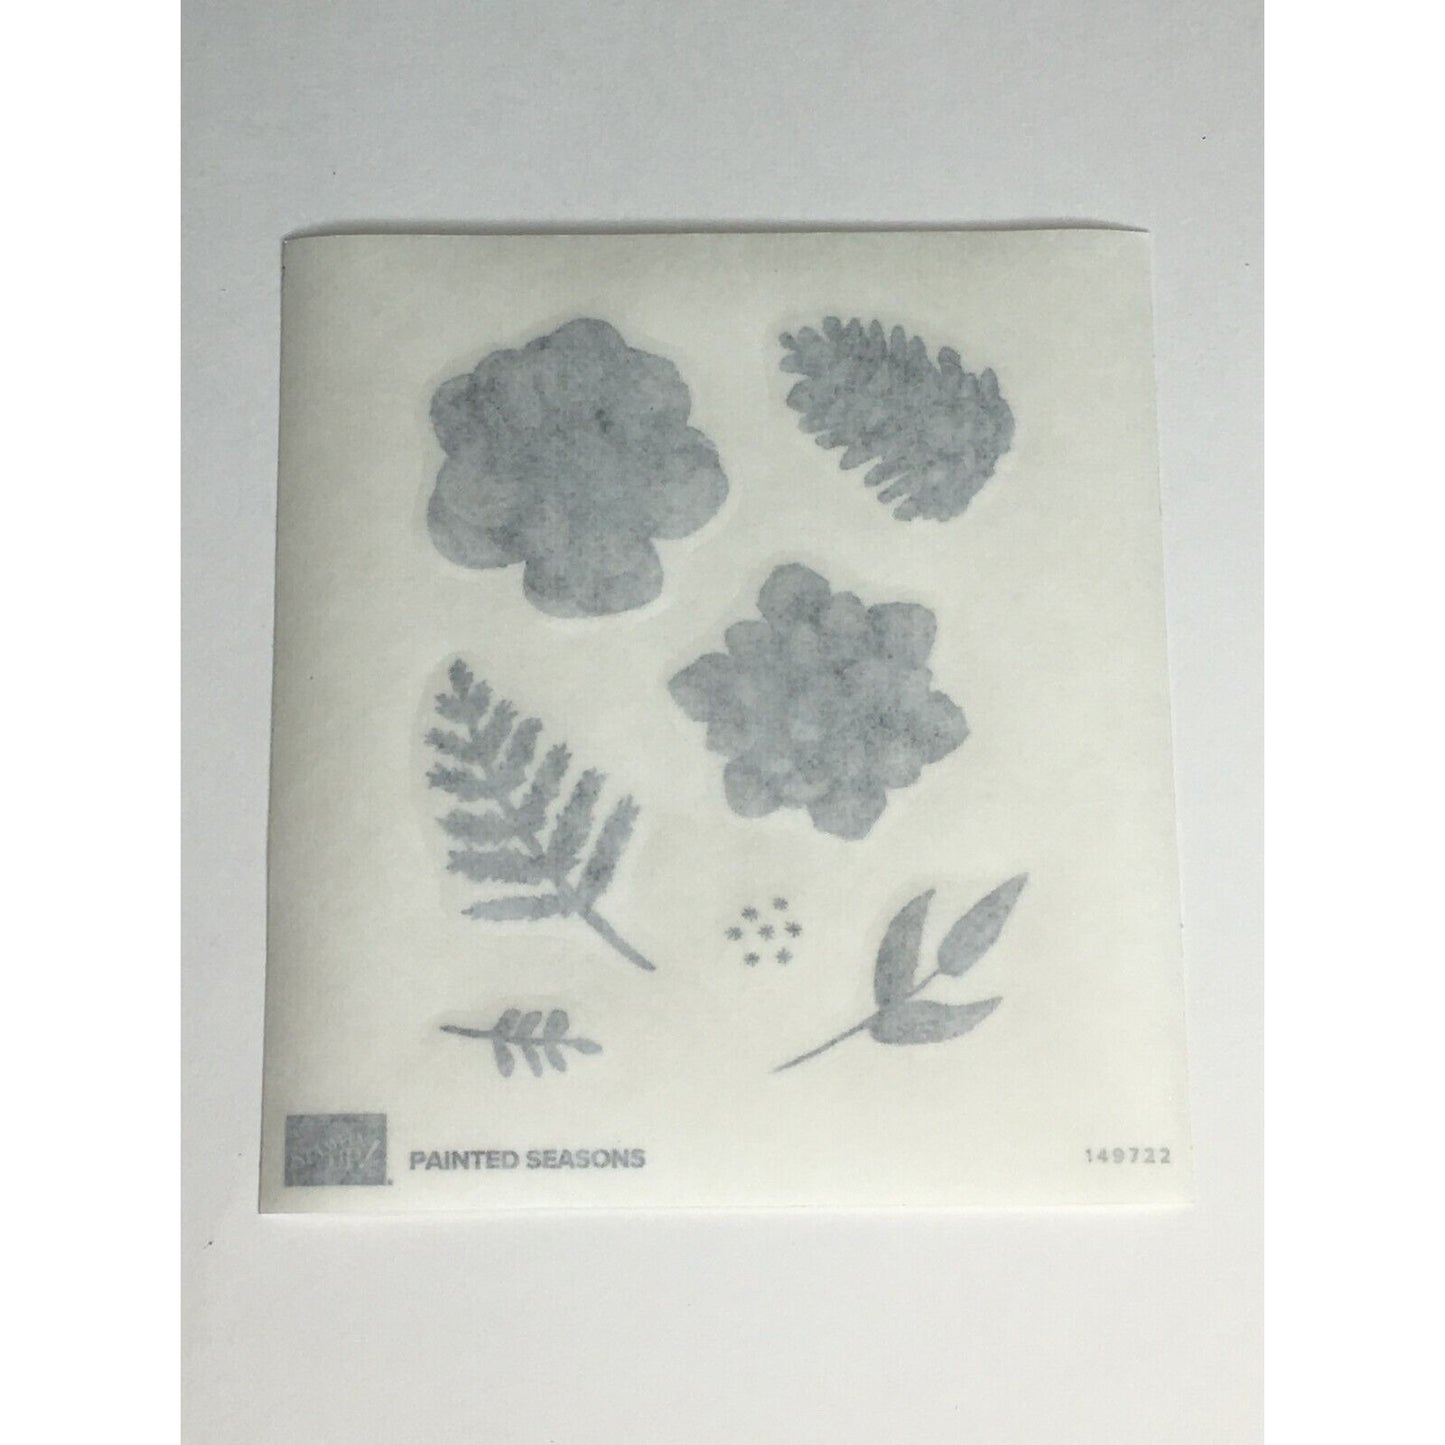 Stampin Up Painted Seasons Stamp Set Framelits Dies Pinecone Nature Leaf Flower